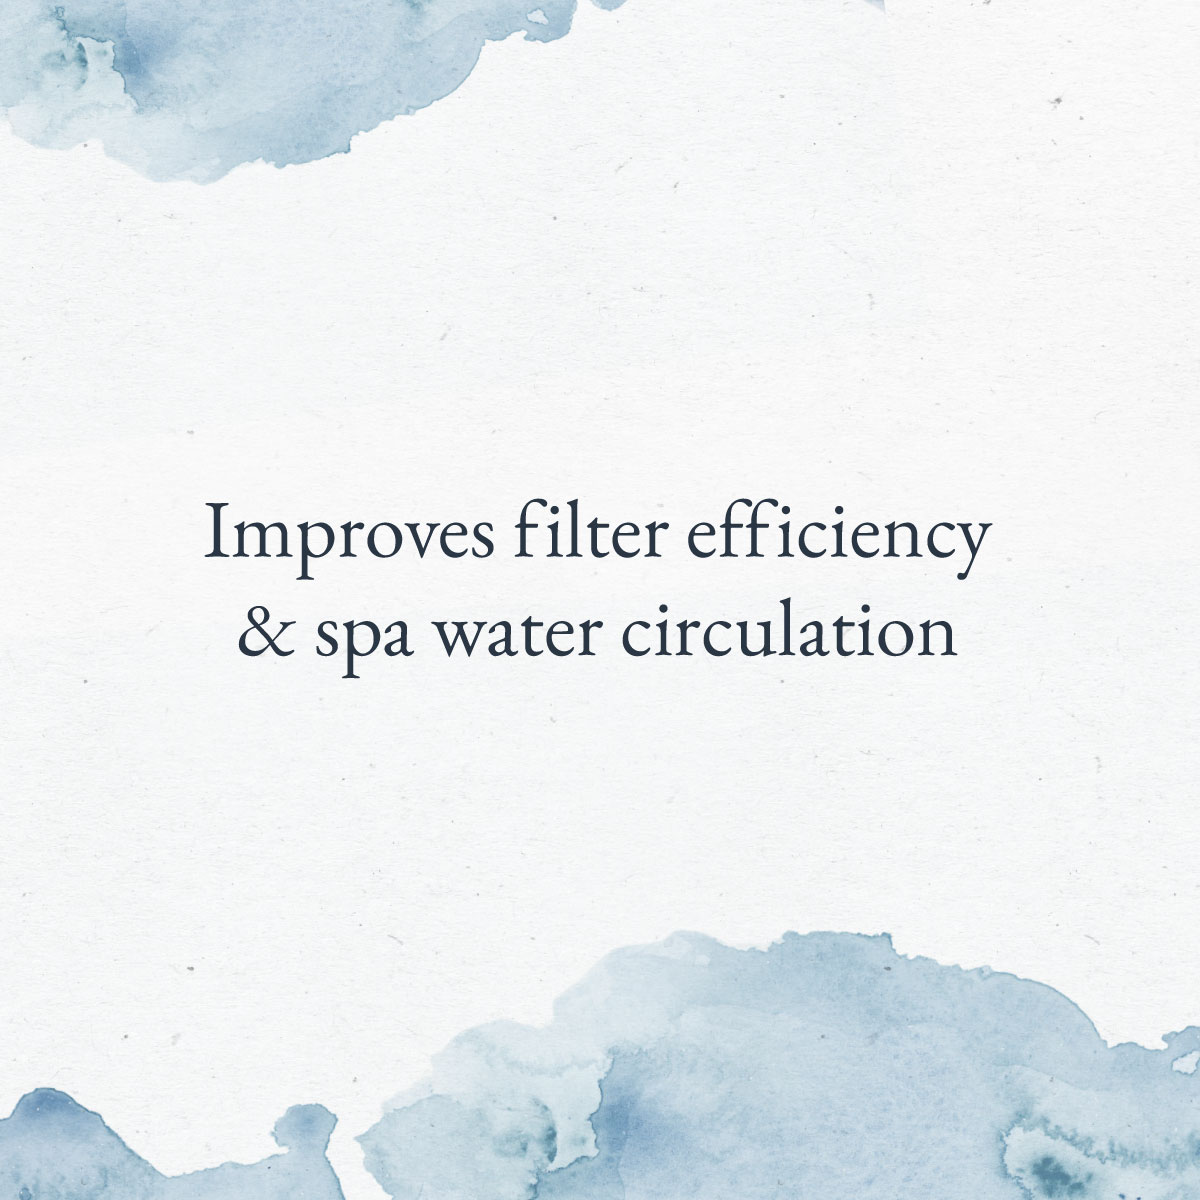 Improves filter efficiency & spa water circulation